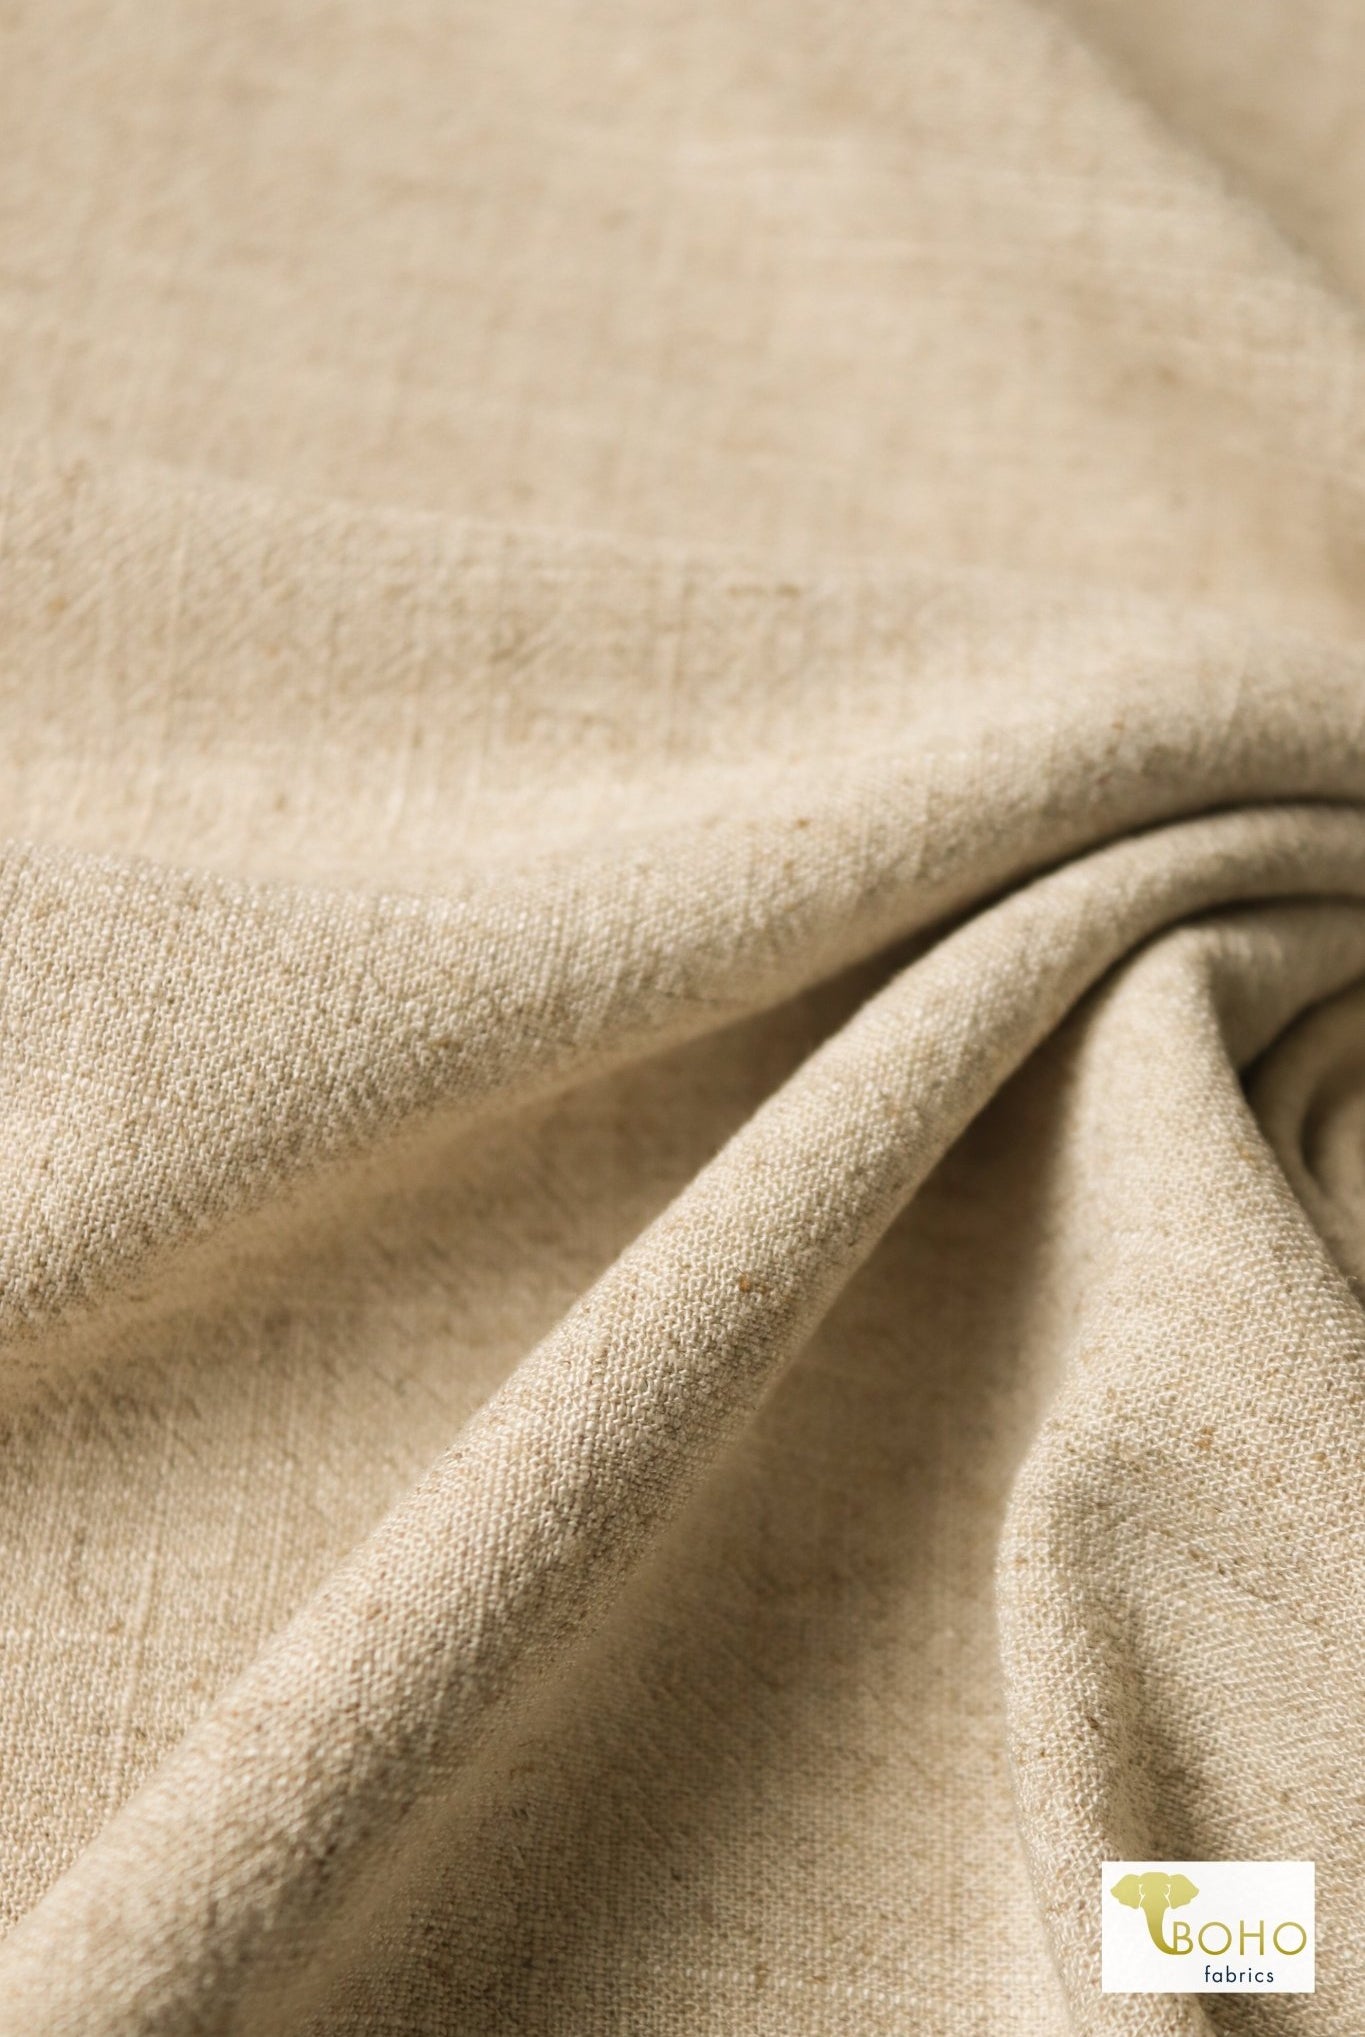 Flax Seed, Linen Woven - Boho Fabrics